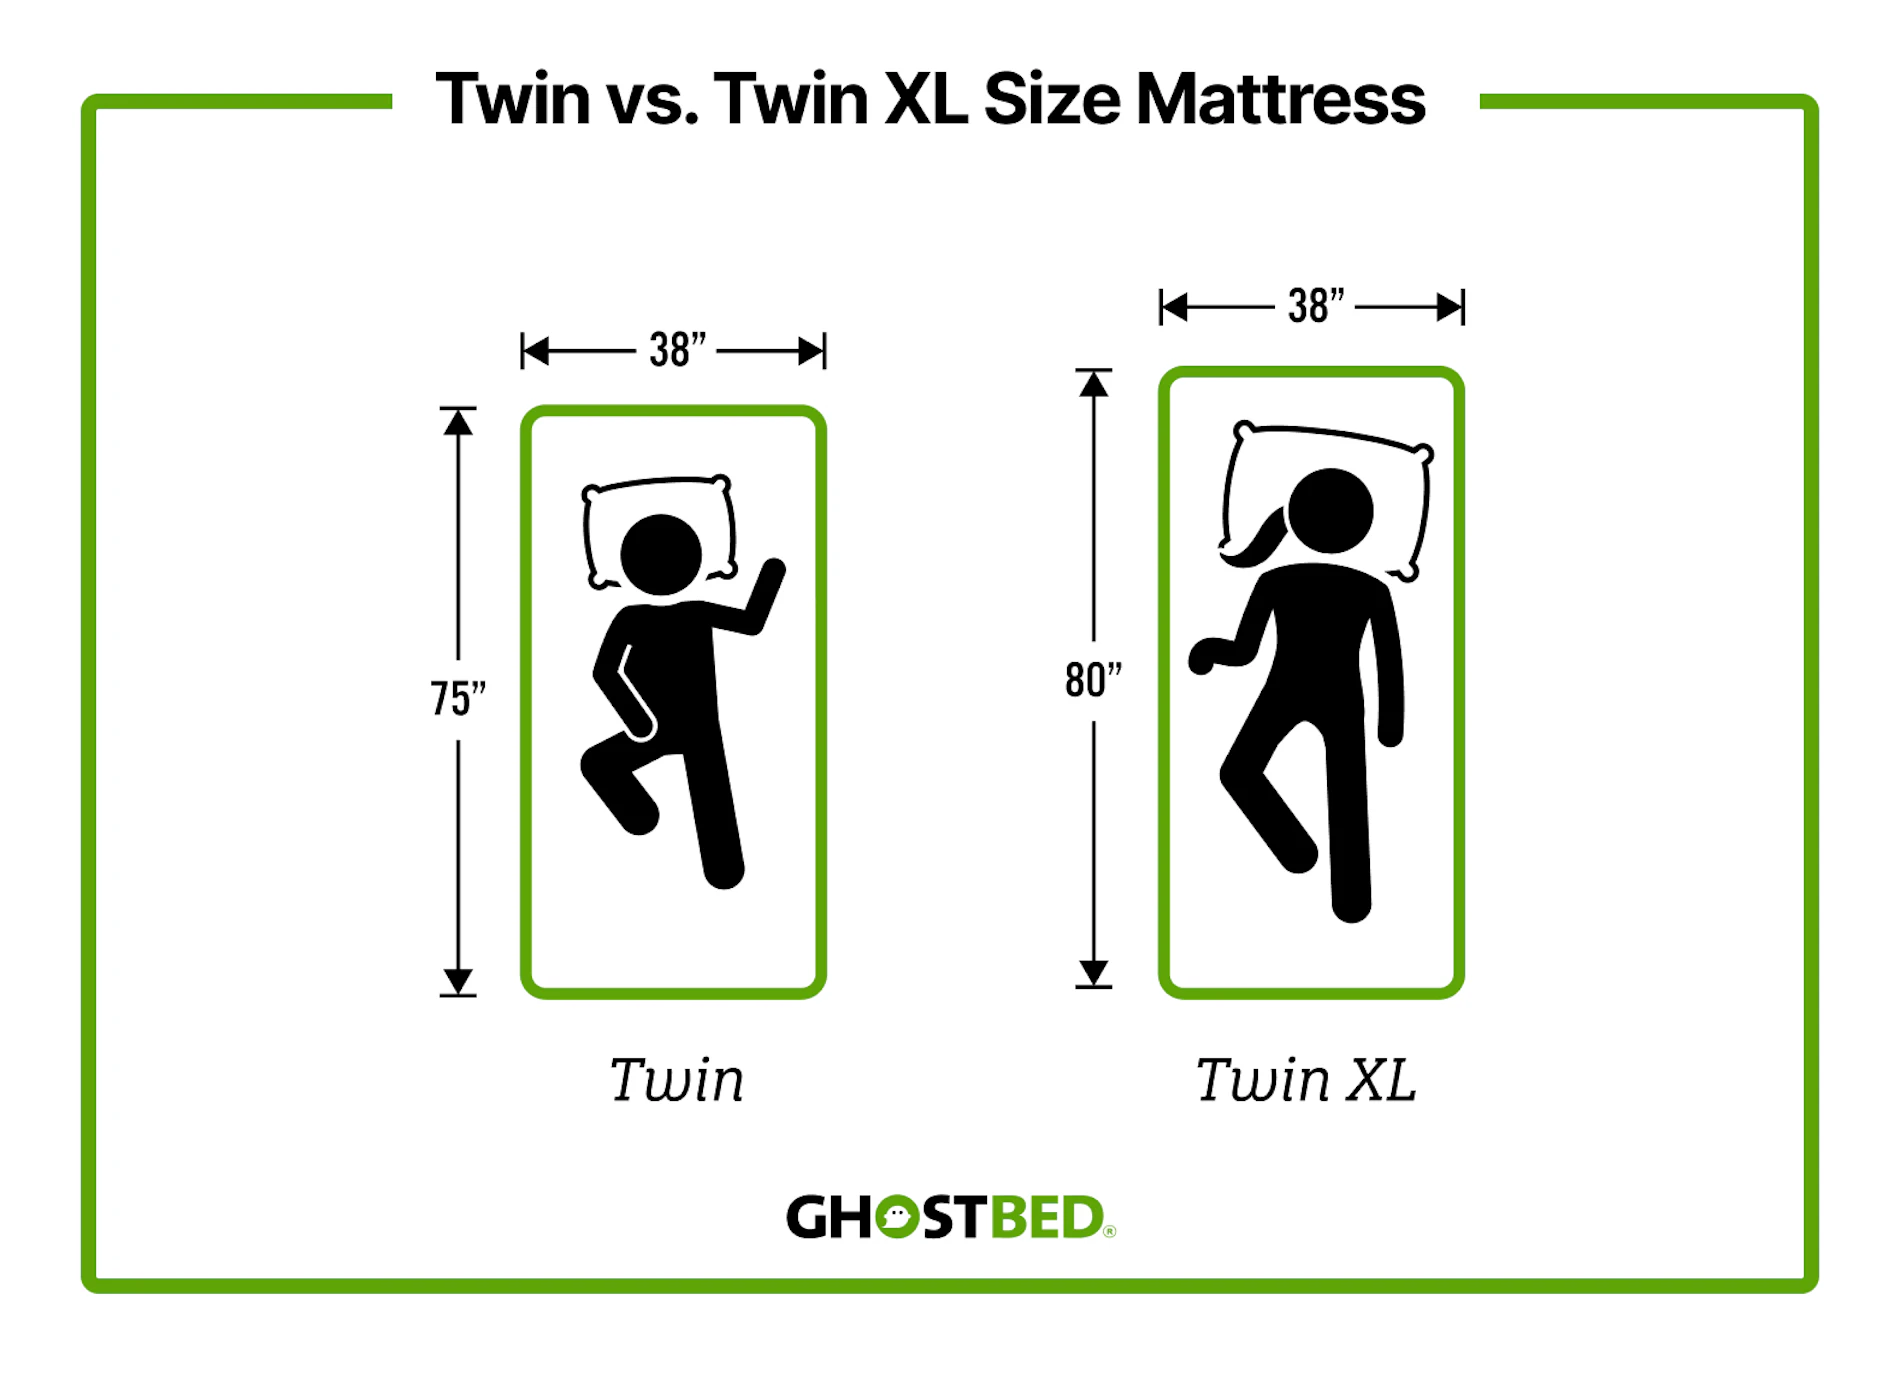 A twin size mattress (38" by 75") vs. a twin XL mattress (38" by 80").